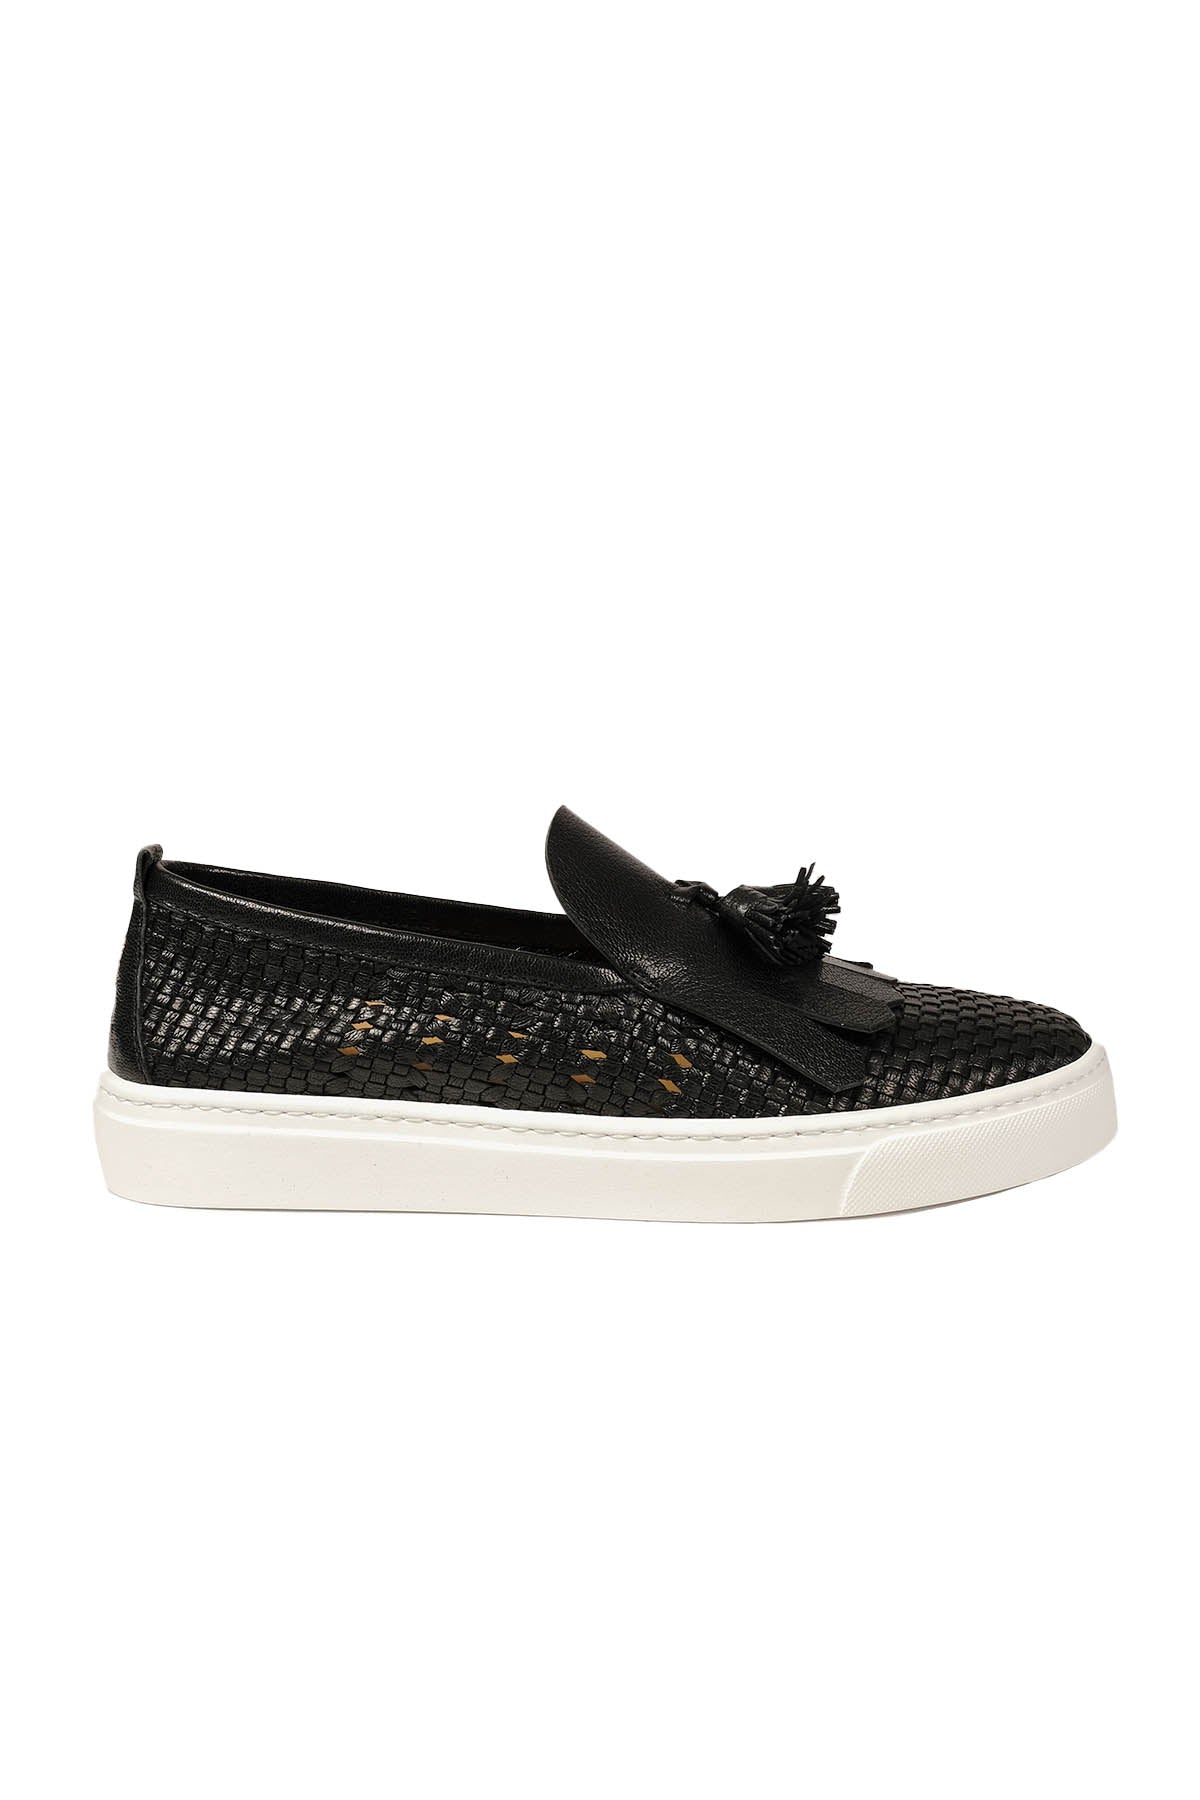 Henderson Marta Püsküllü Loafer Ayakkabı-Libas Trendy Fashion Store